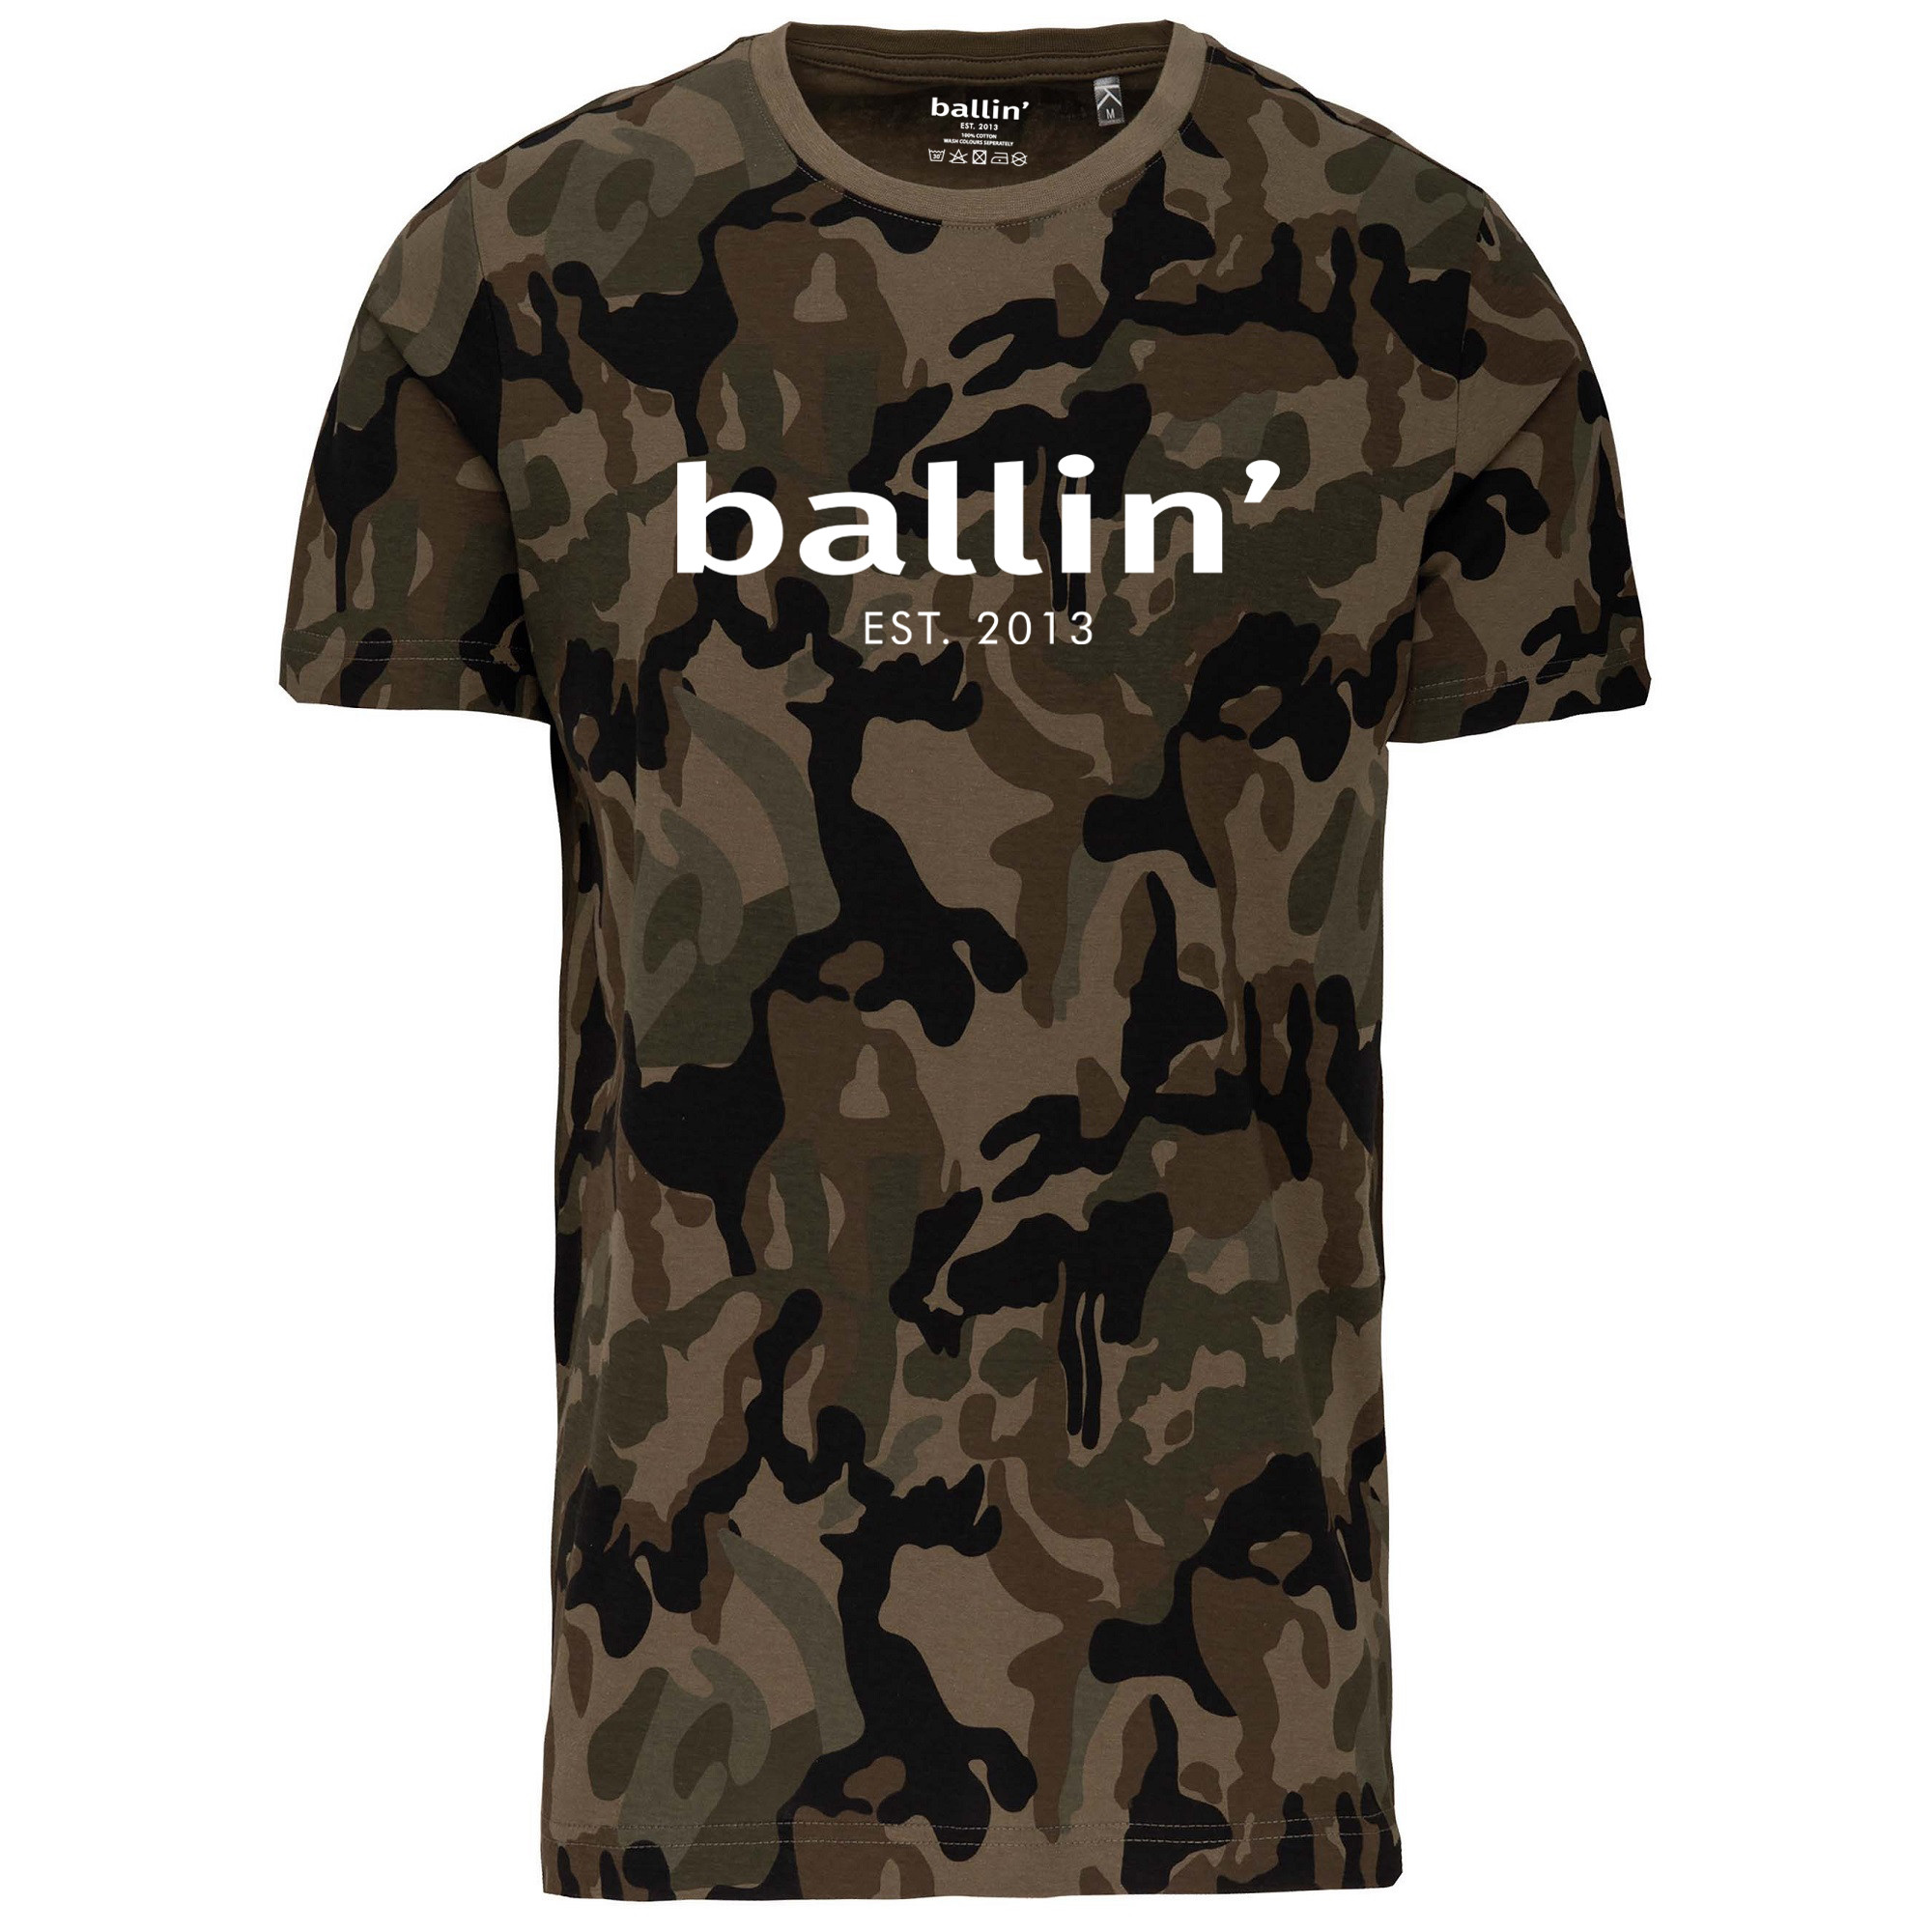 Afbeelding van Ballin Est. 2013 Army camouflage shirt